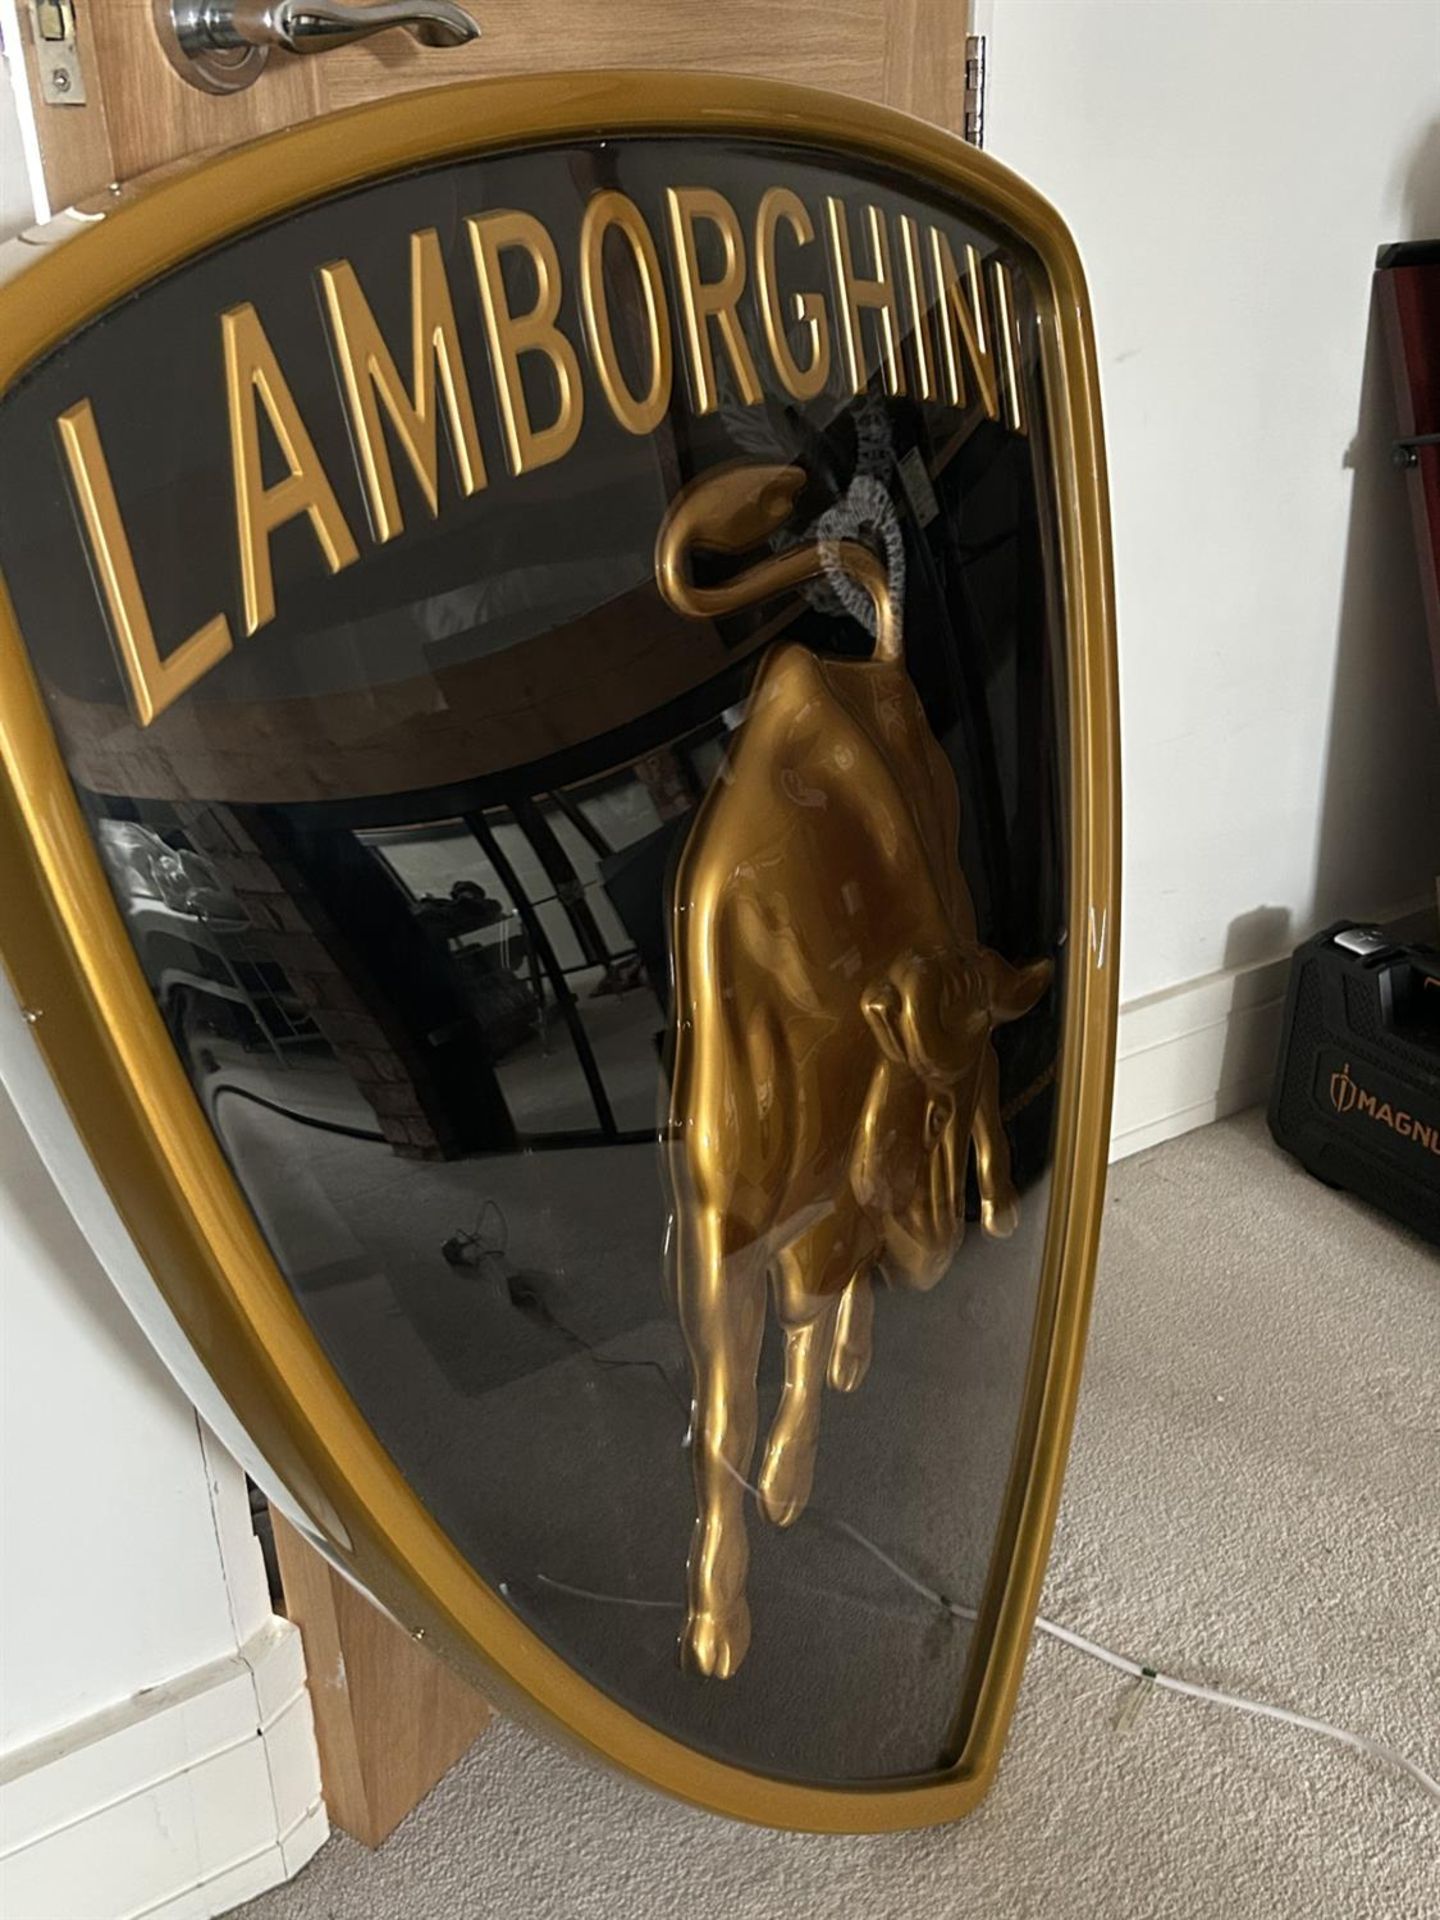 Substantial Illuminated 'Lamborghini' Shield - Image 3 of 3